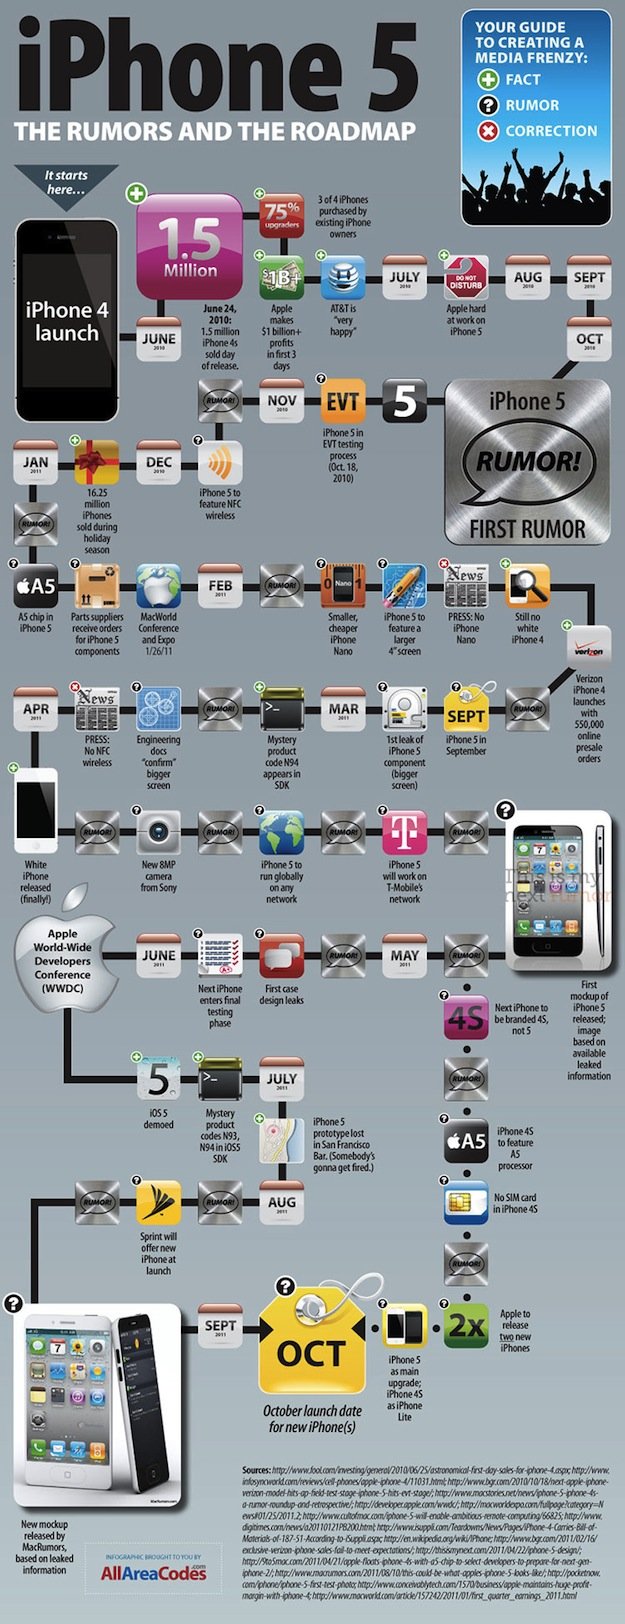 iphone 5 rumor infographic